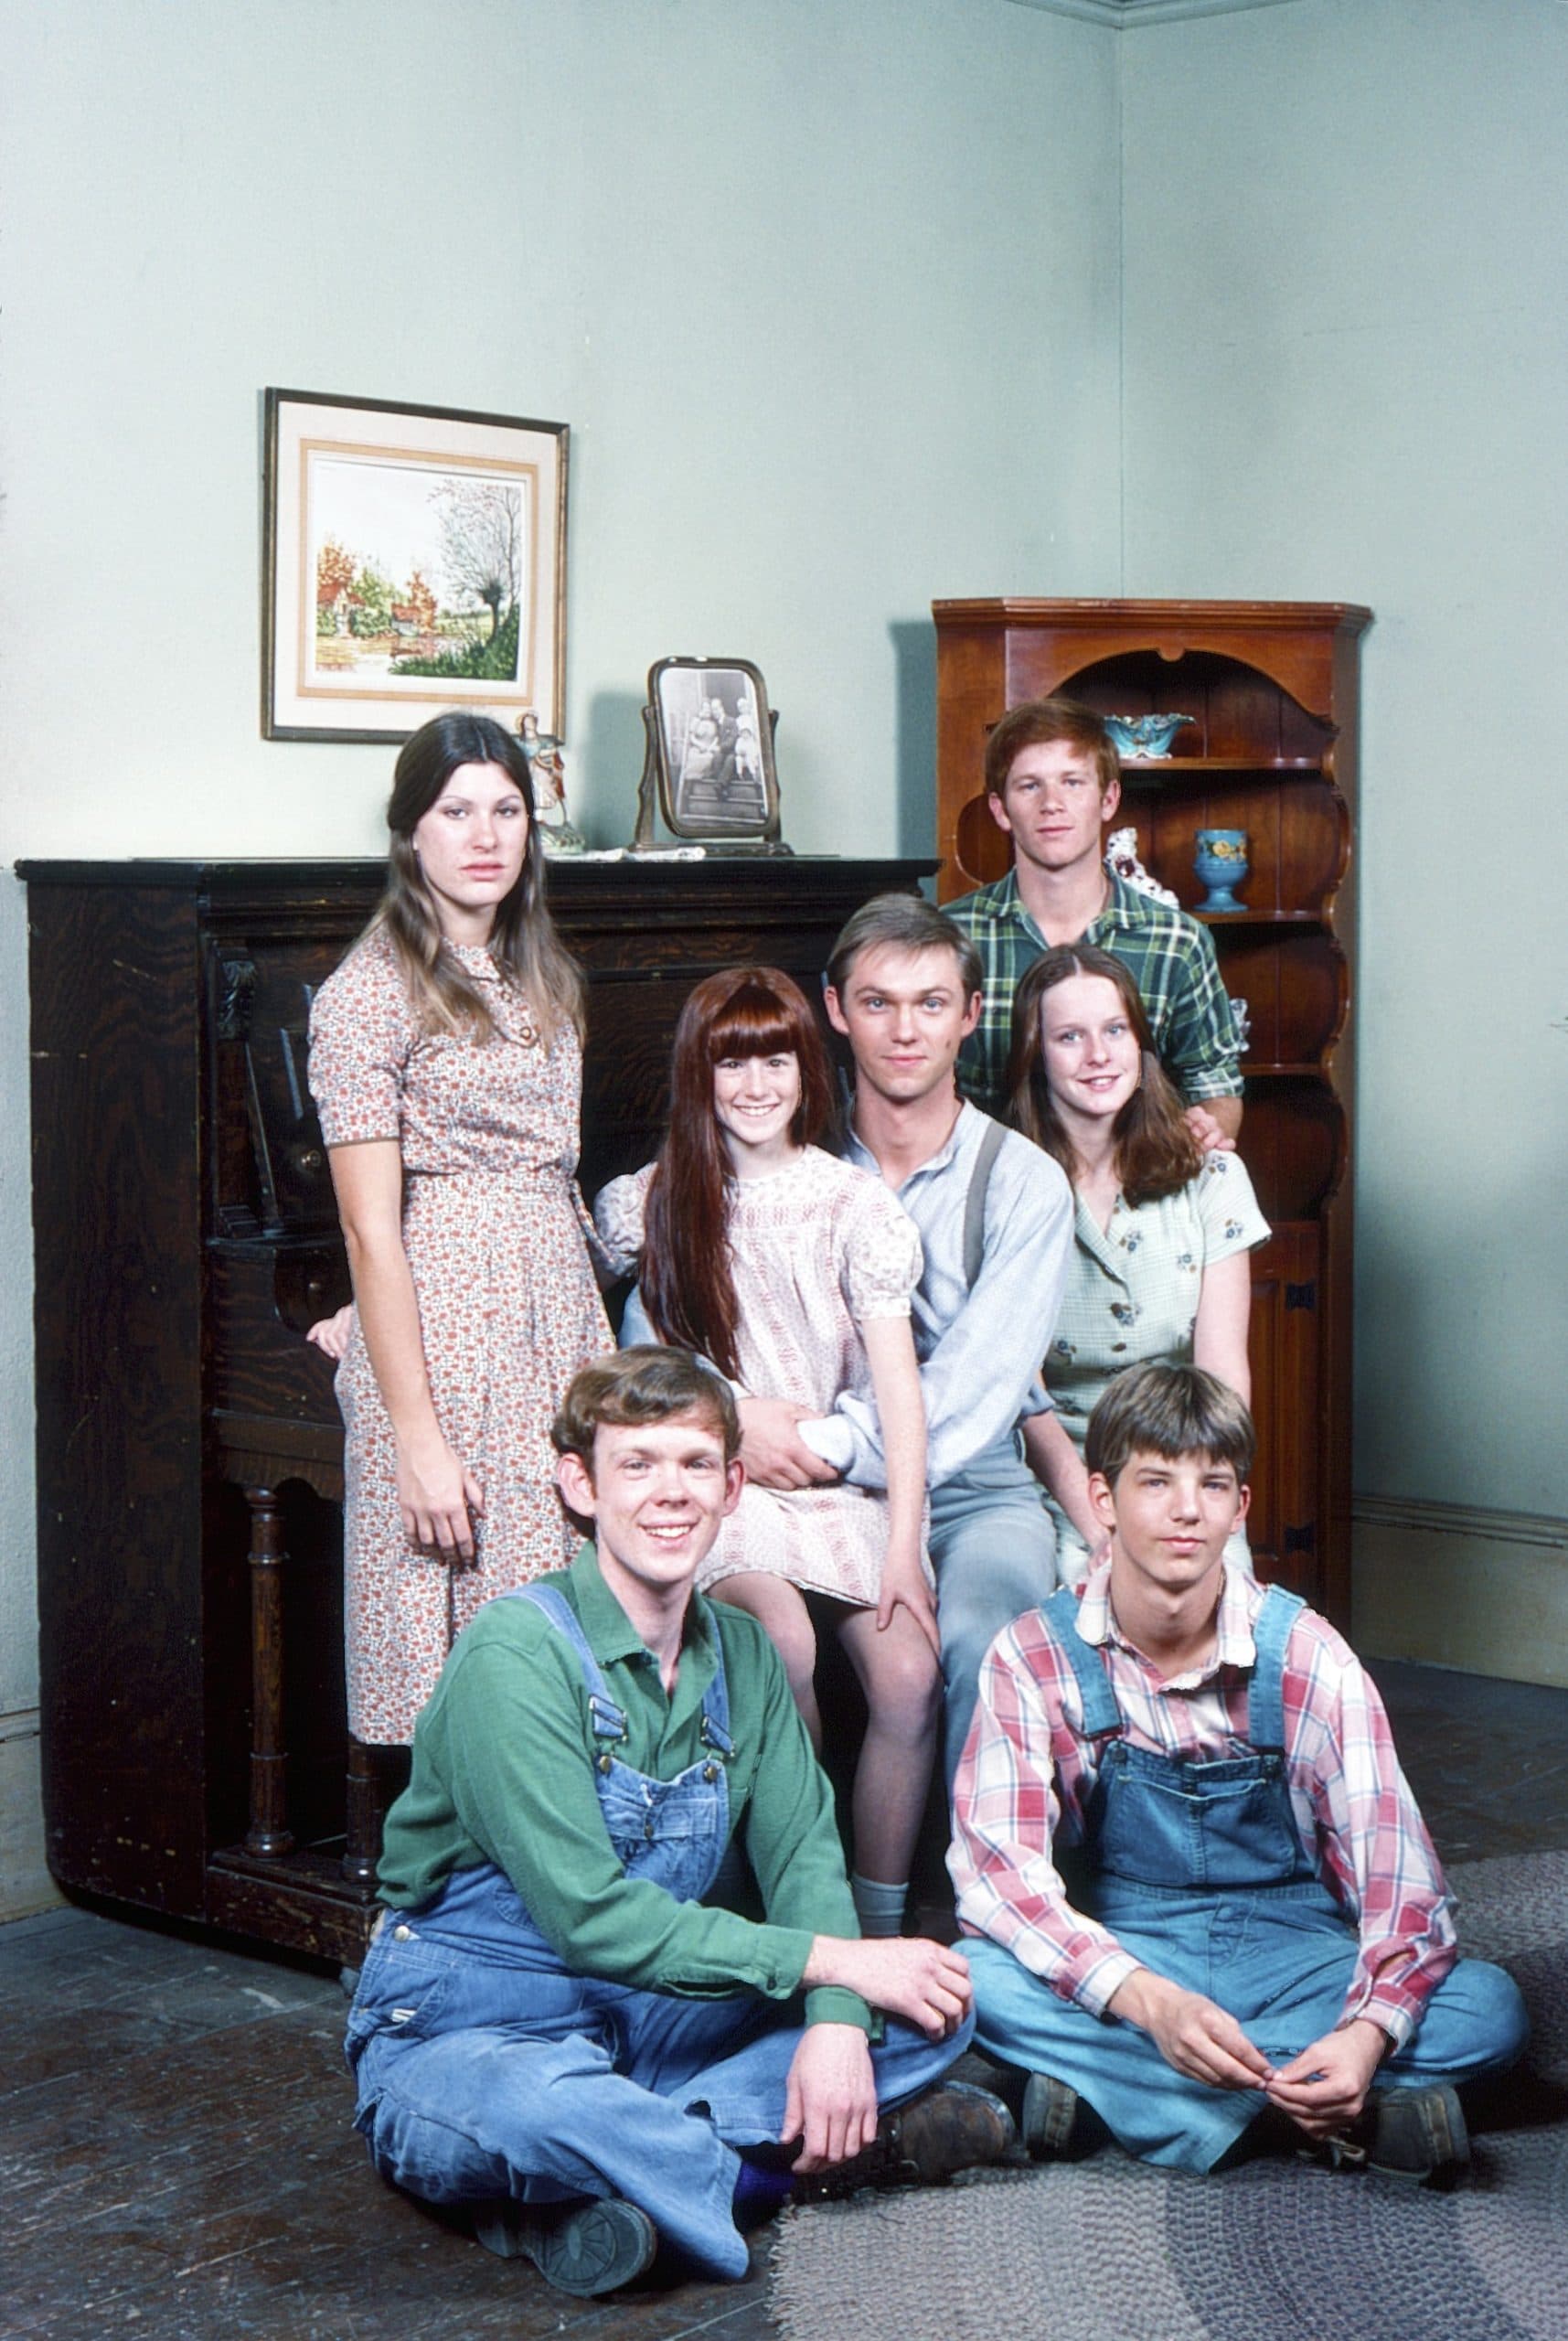 THE WALTONS, from left: Judy Norton, Jon Walmsley, Kami Cotler, Richard Thomas, Eric Scott (top), Mary Beth McDonough, David W. Harper (front), (1976), 1971-1981